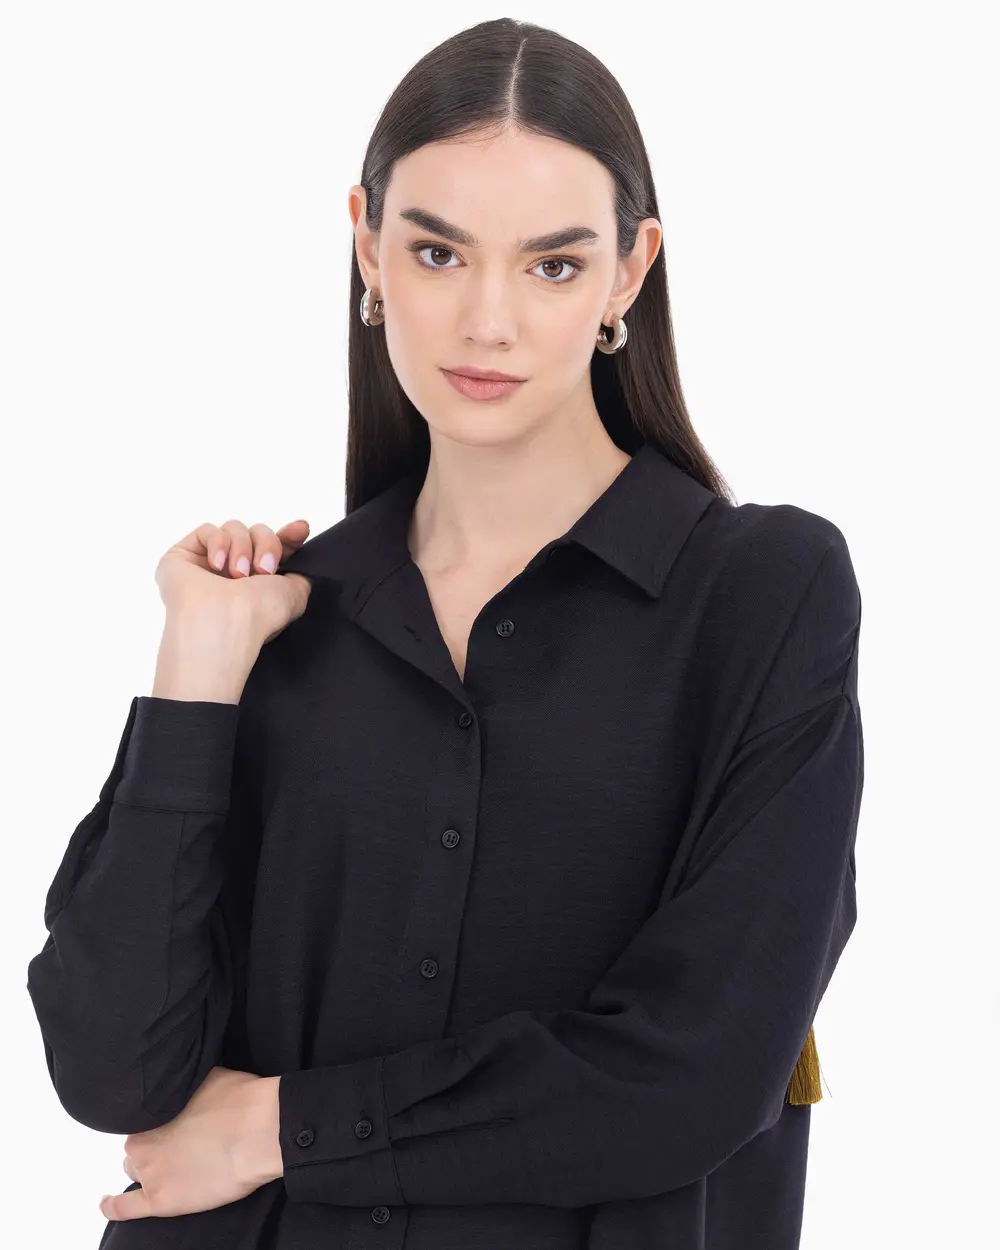 Shirt Collar Accessory Low Sleeve Tunic